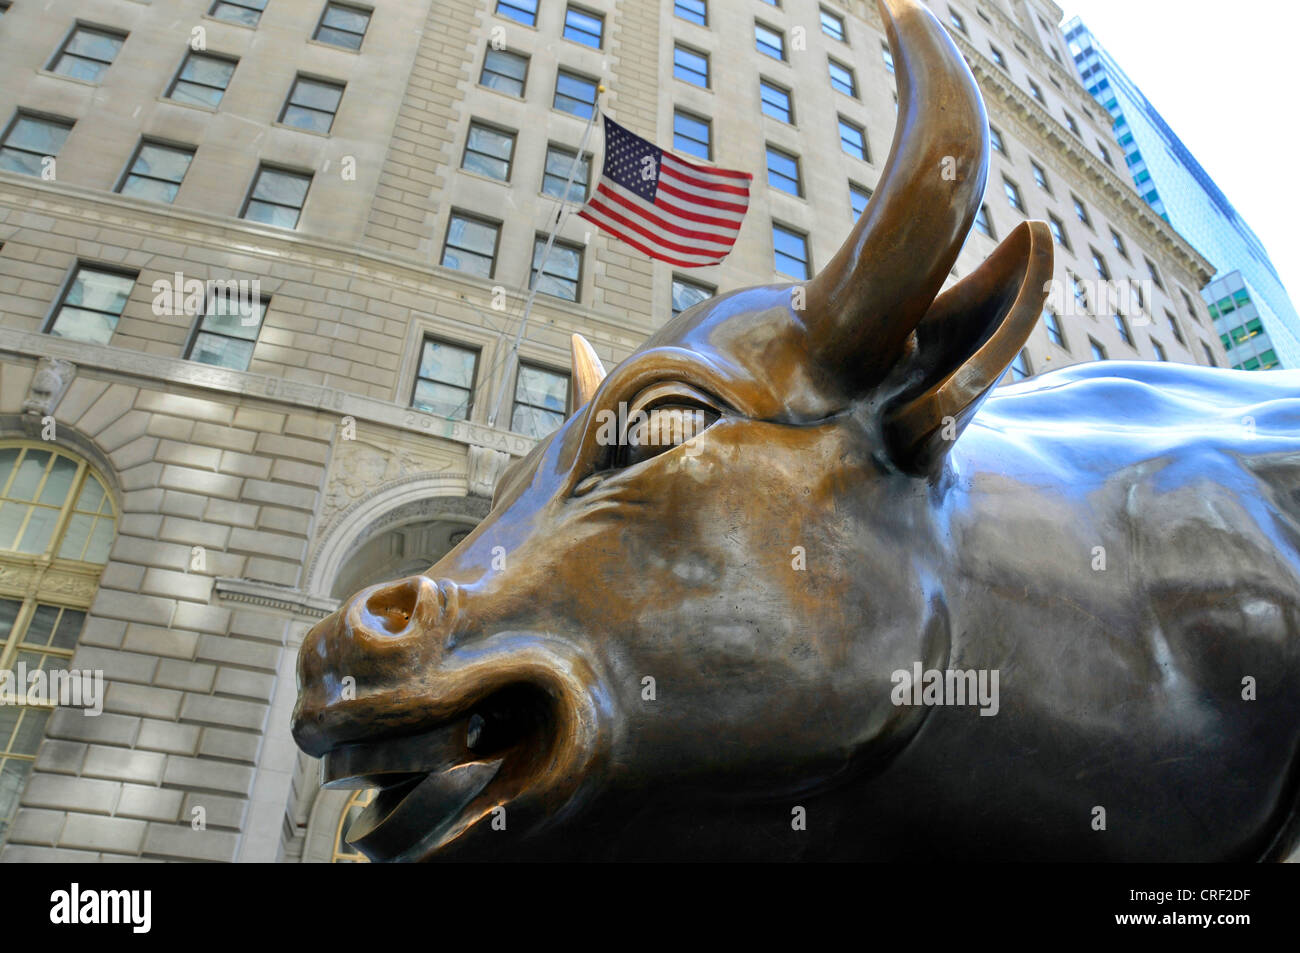 charging bull at New York Stock Exchange, Wall Street, Bowling Green, USA, New York City, Manhattan, Wall Street Stock Photo